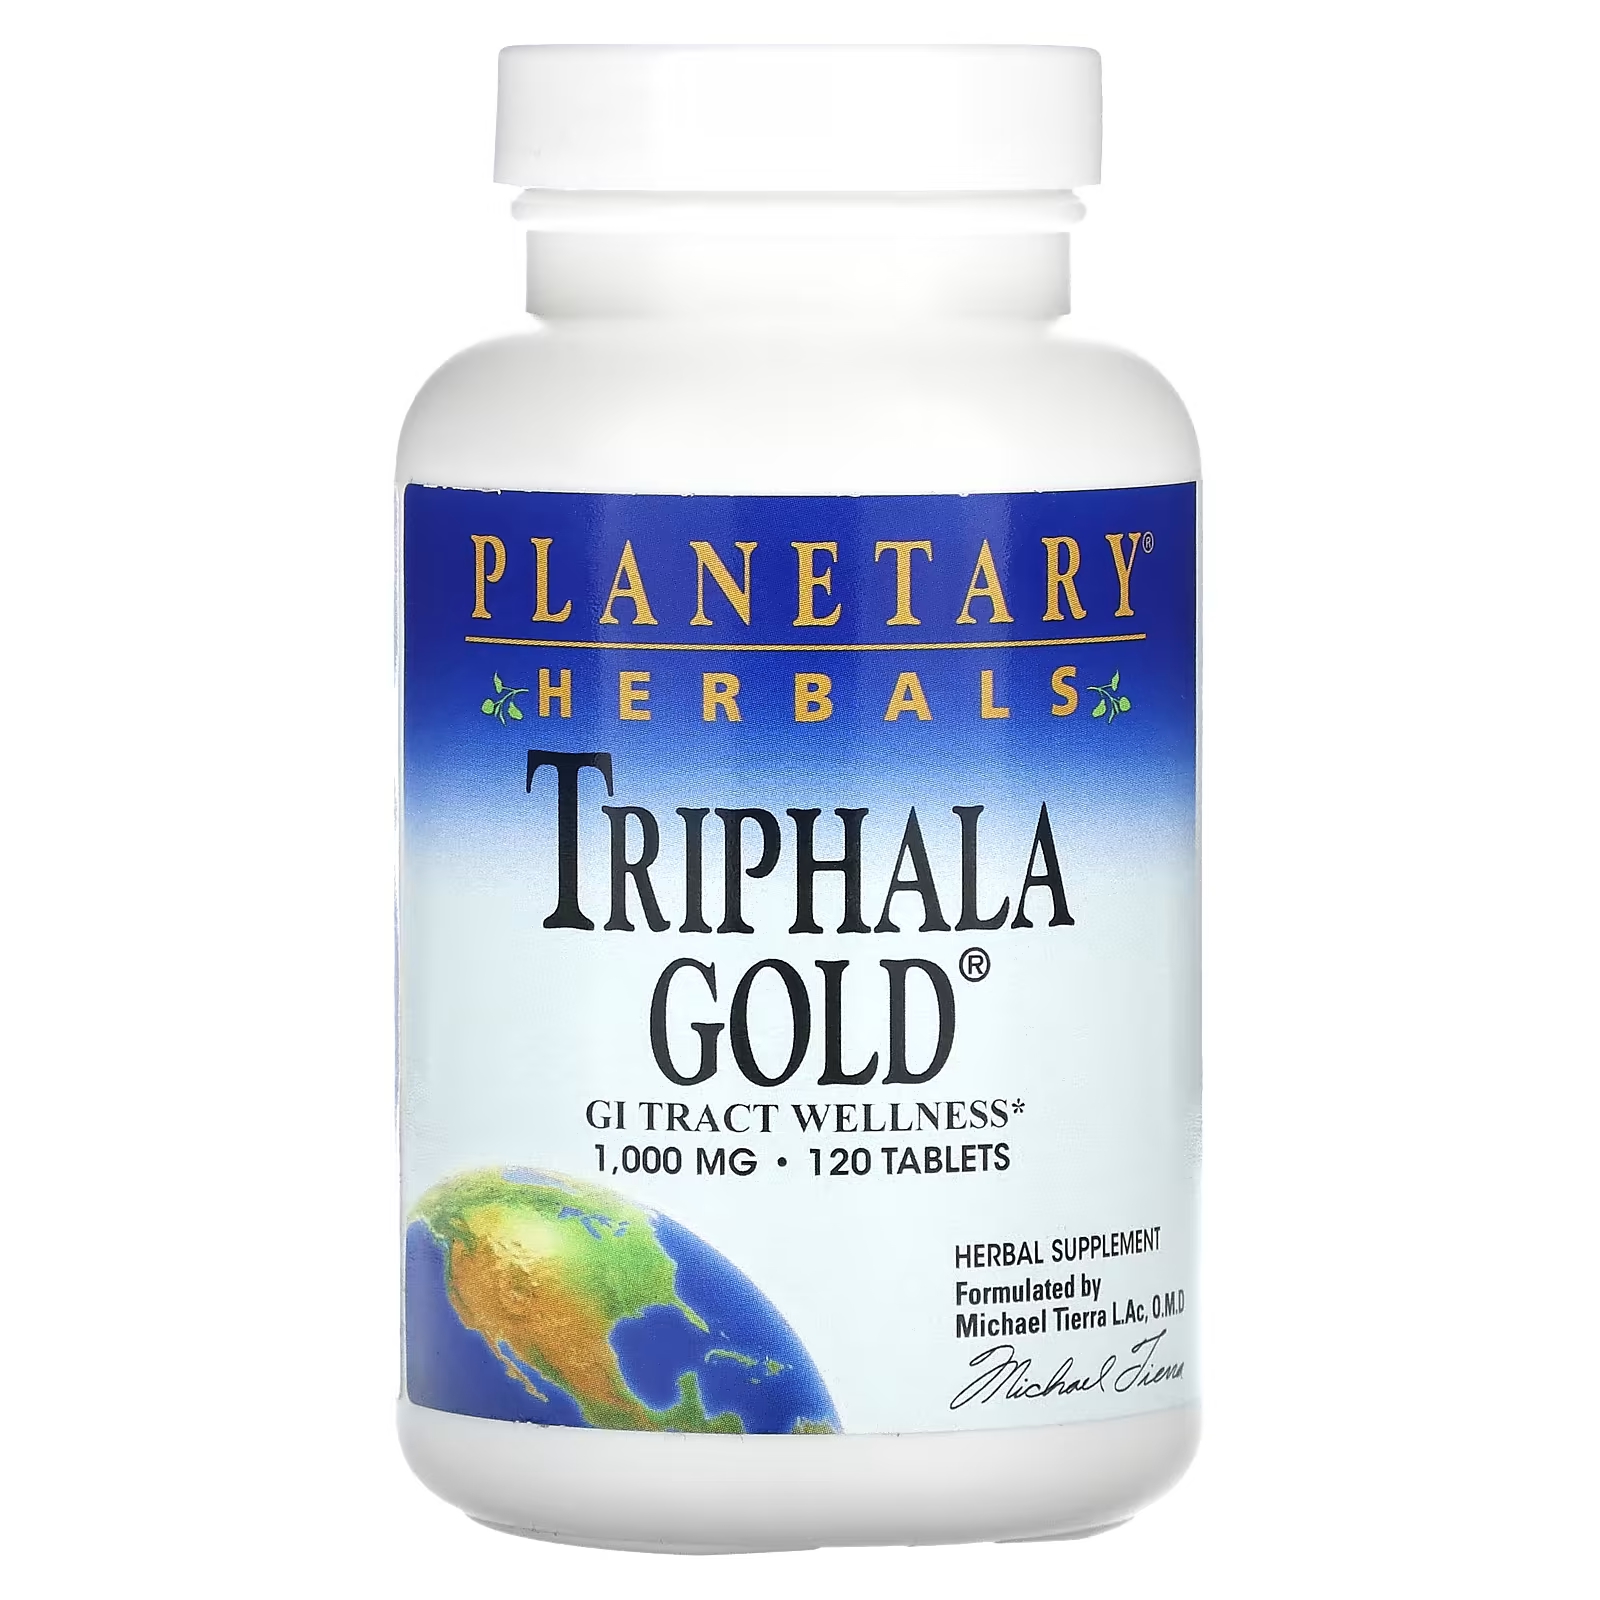 Planetary Herbals Трифала Голд 120 таблеток